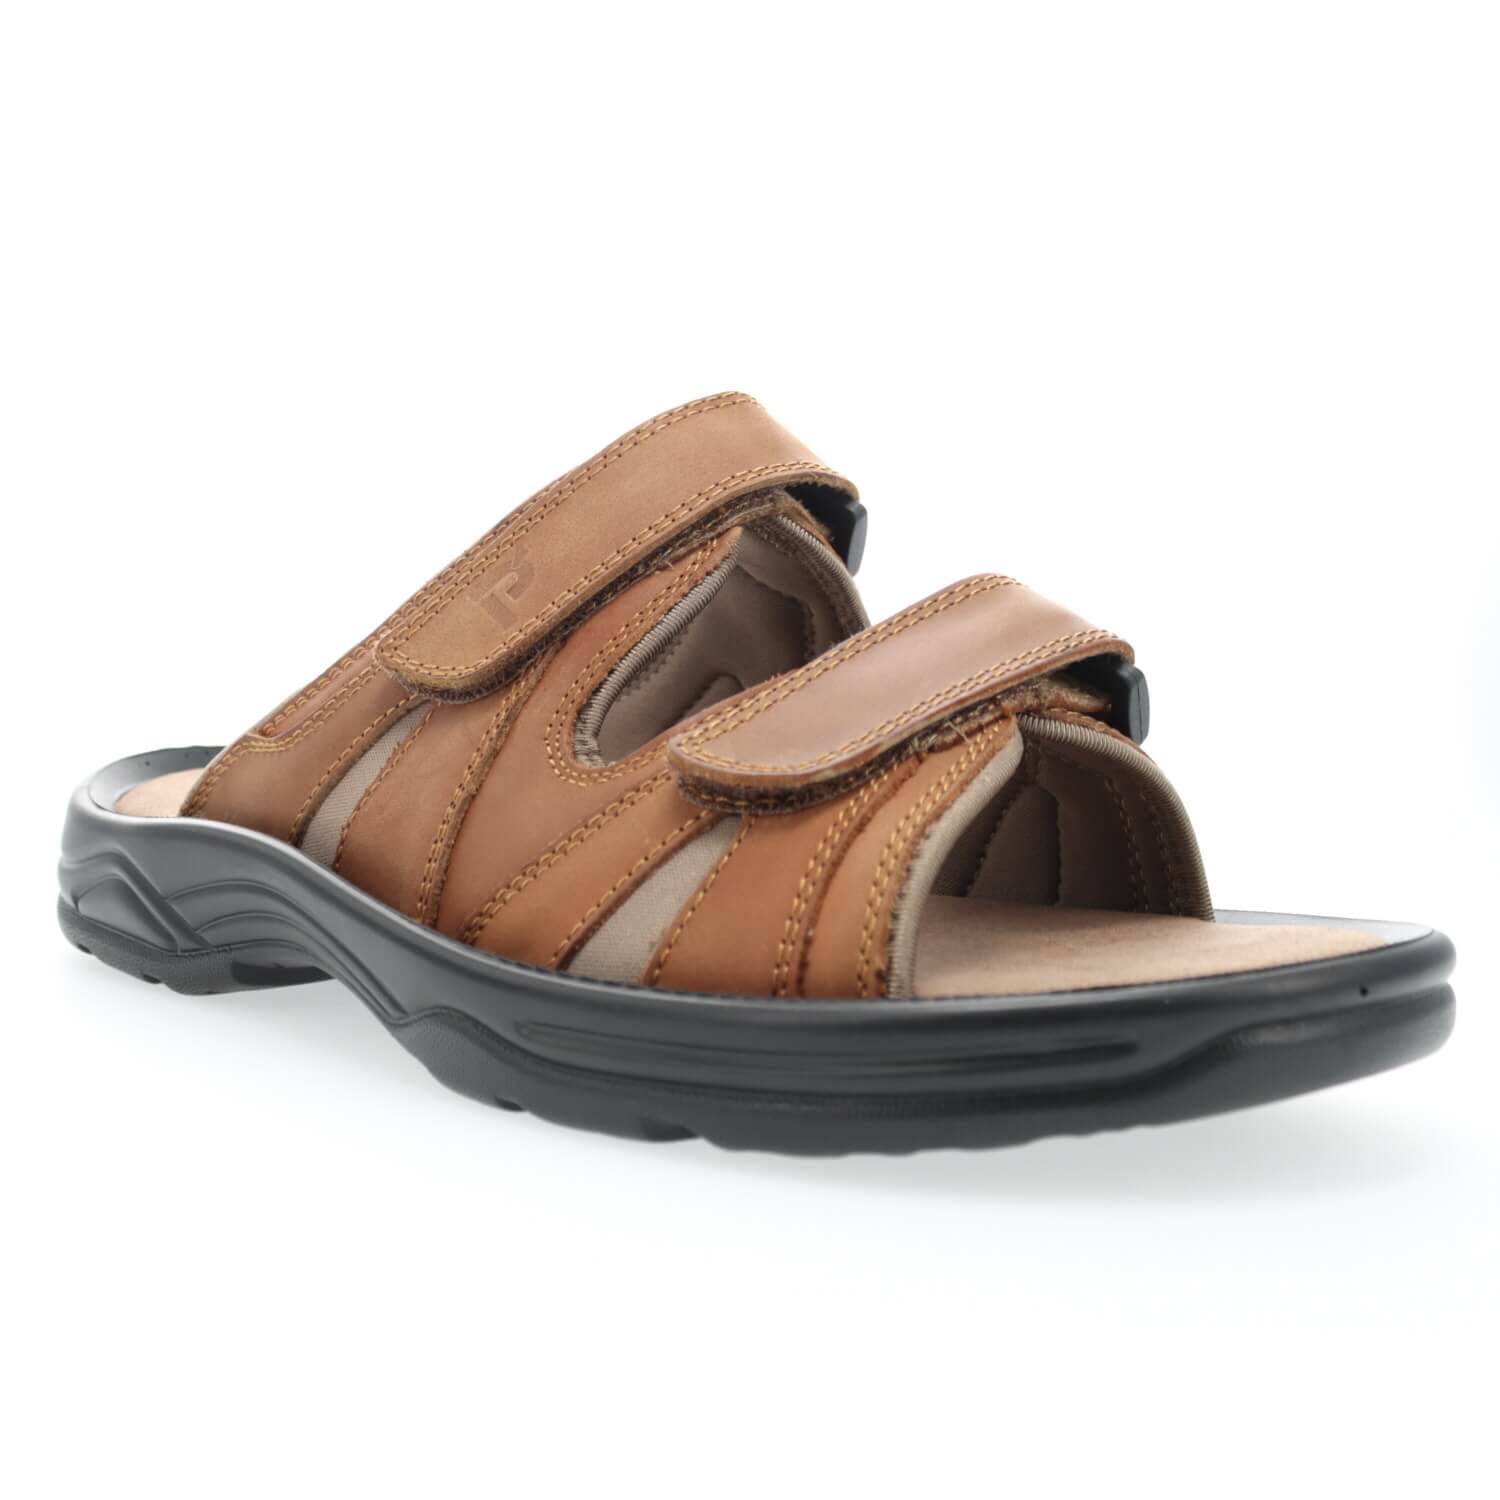 Propet Vero MSV003L Men's Sandal - Comfort Casual Sandal - Extra Depth For Removable Footbed - Extra Wide